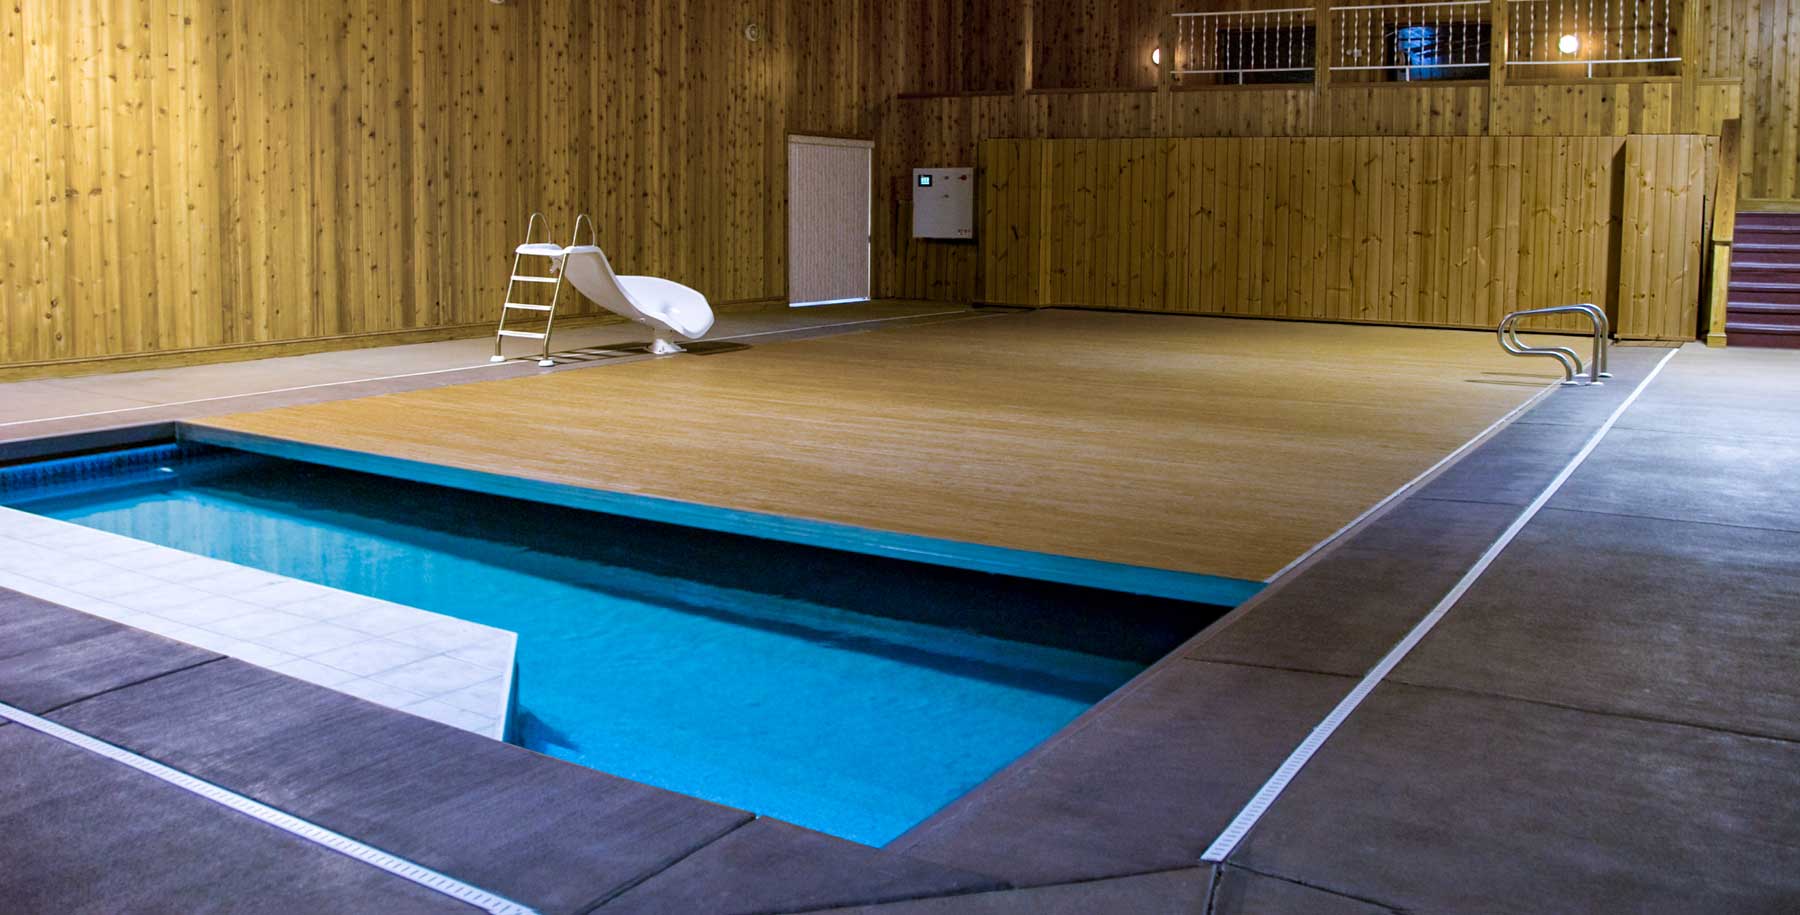 sliding deck pool cover plans